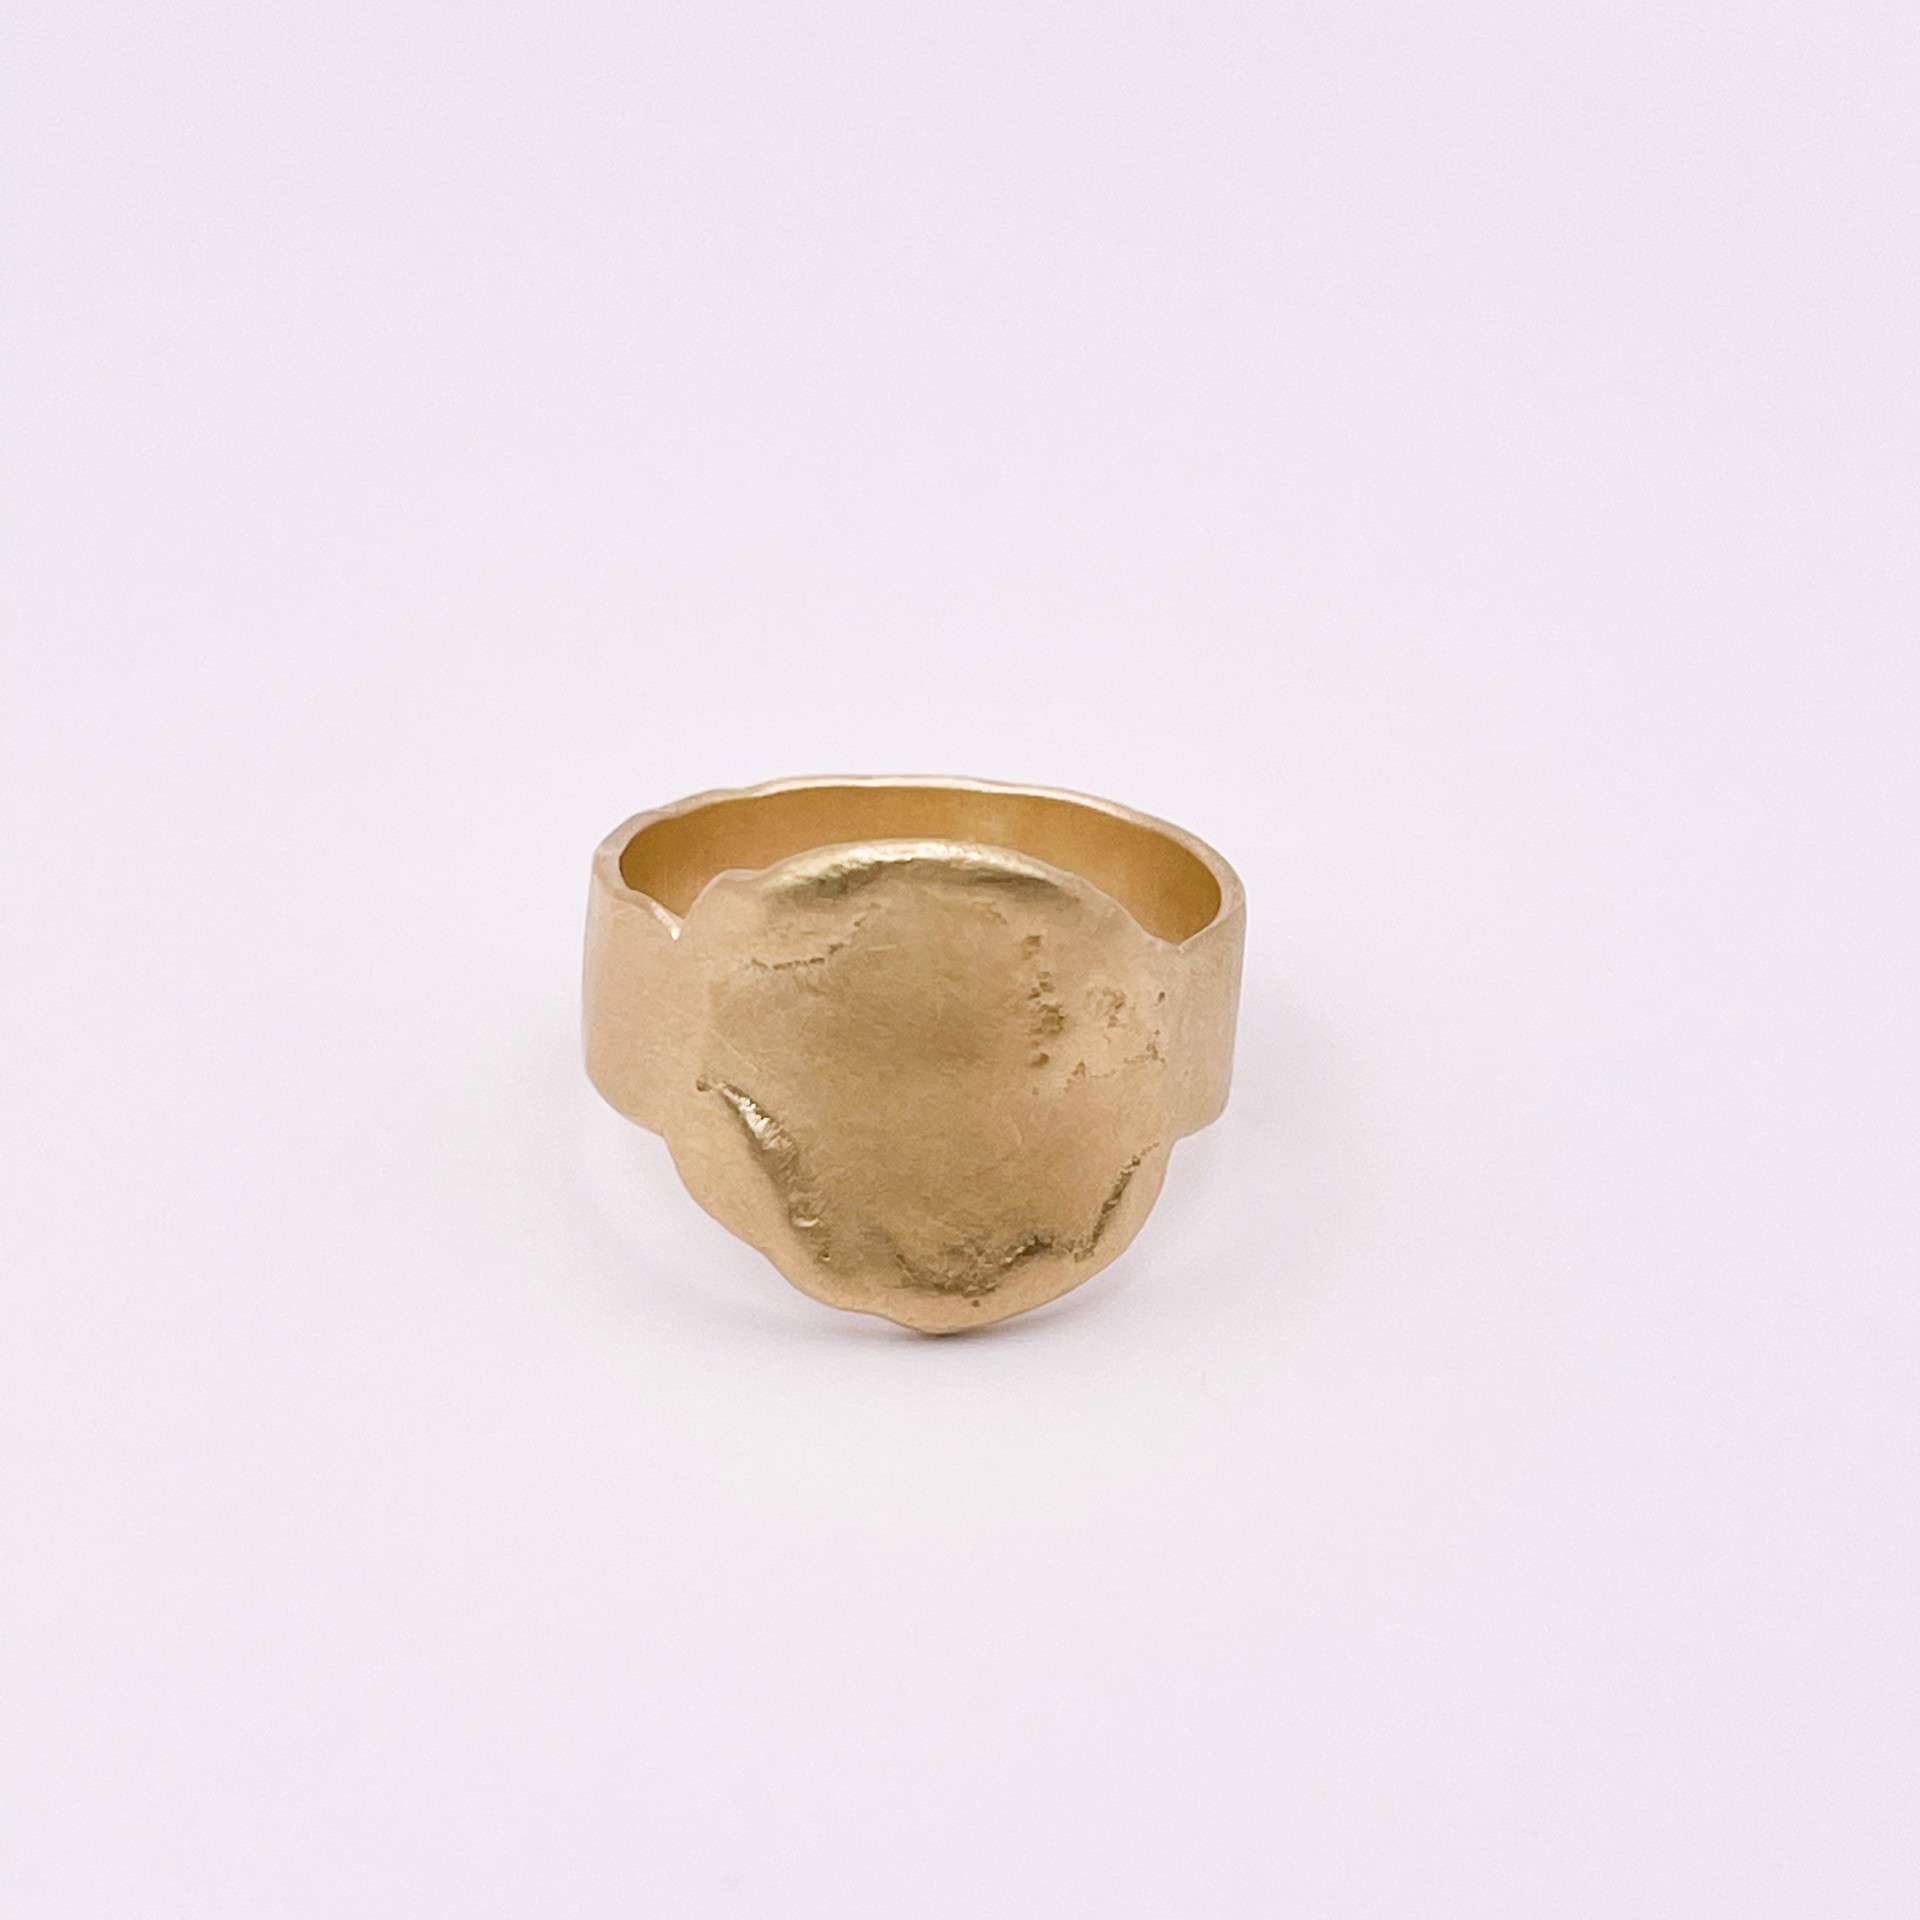 LHR06- 18k gold Mini Shield Ring by Leandra Hill